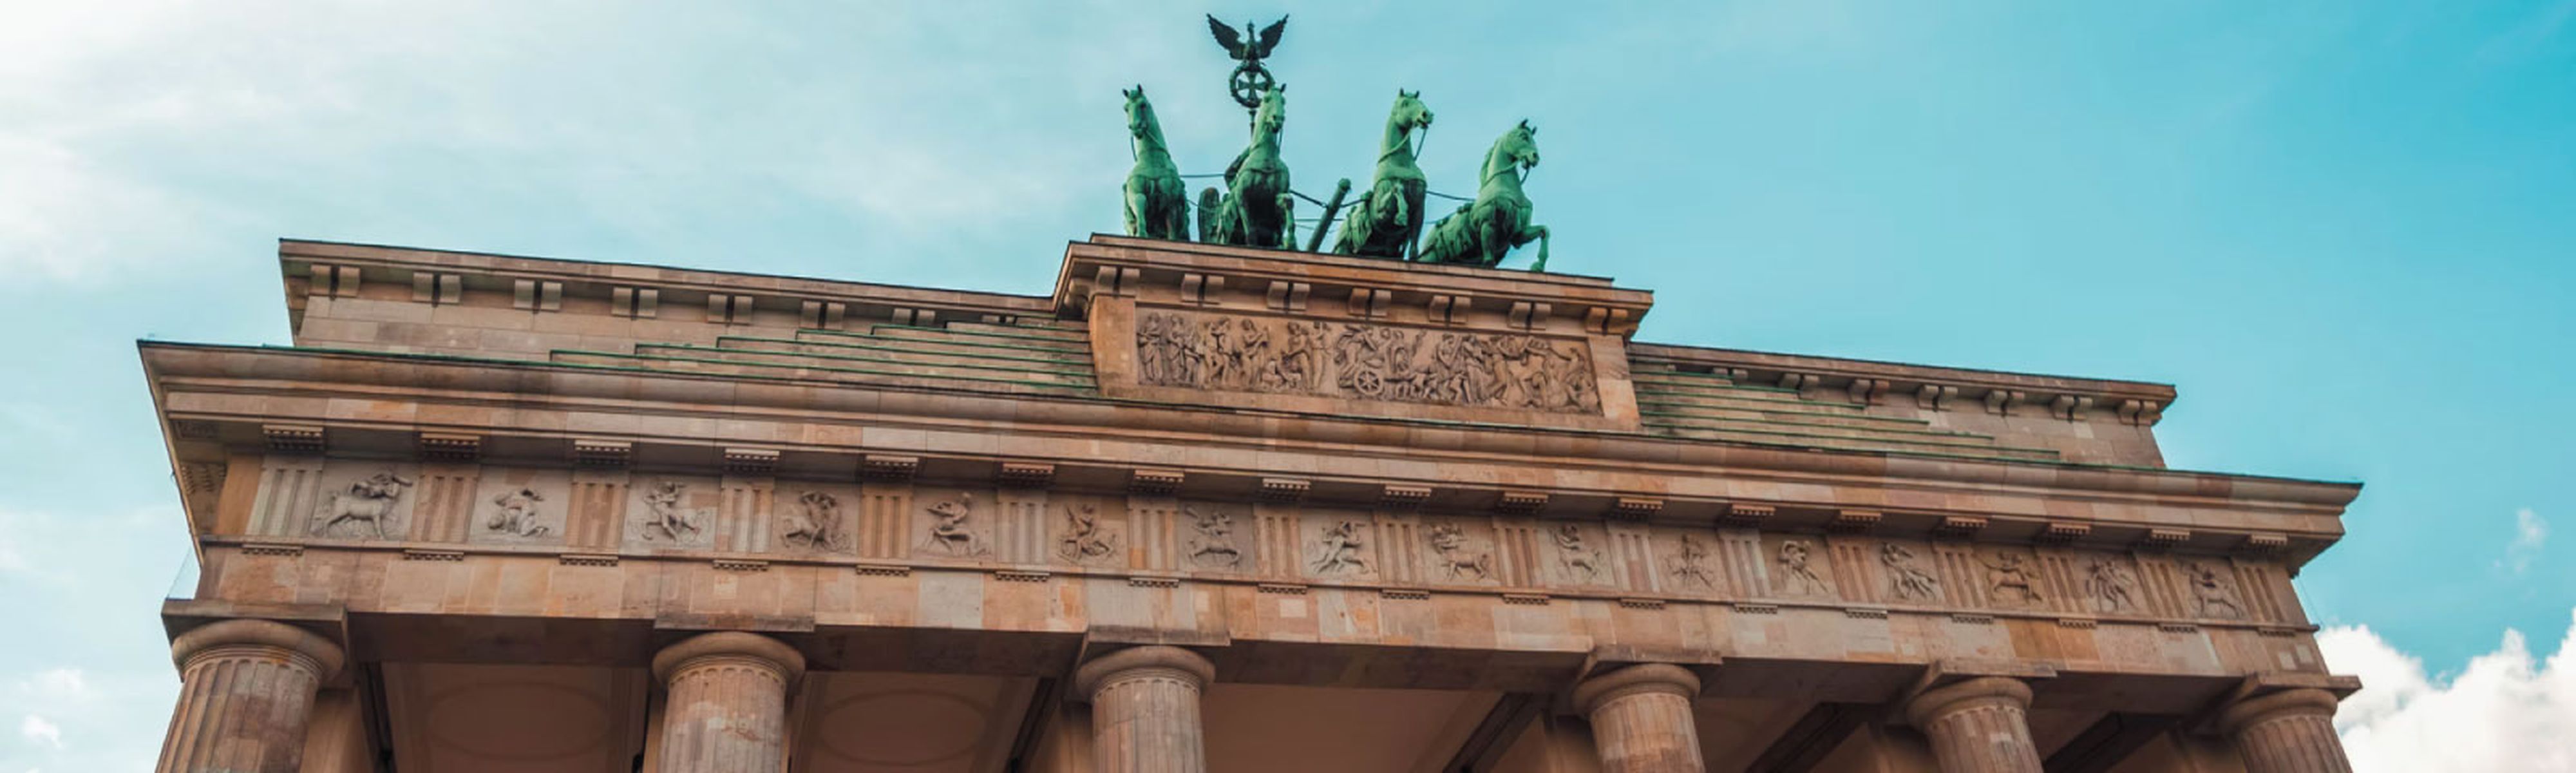 green horse statues on top of brandenburg gate in berlin